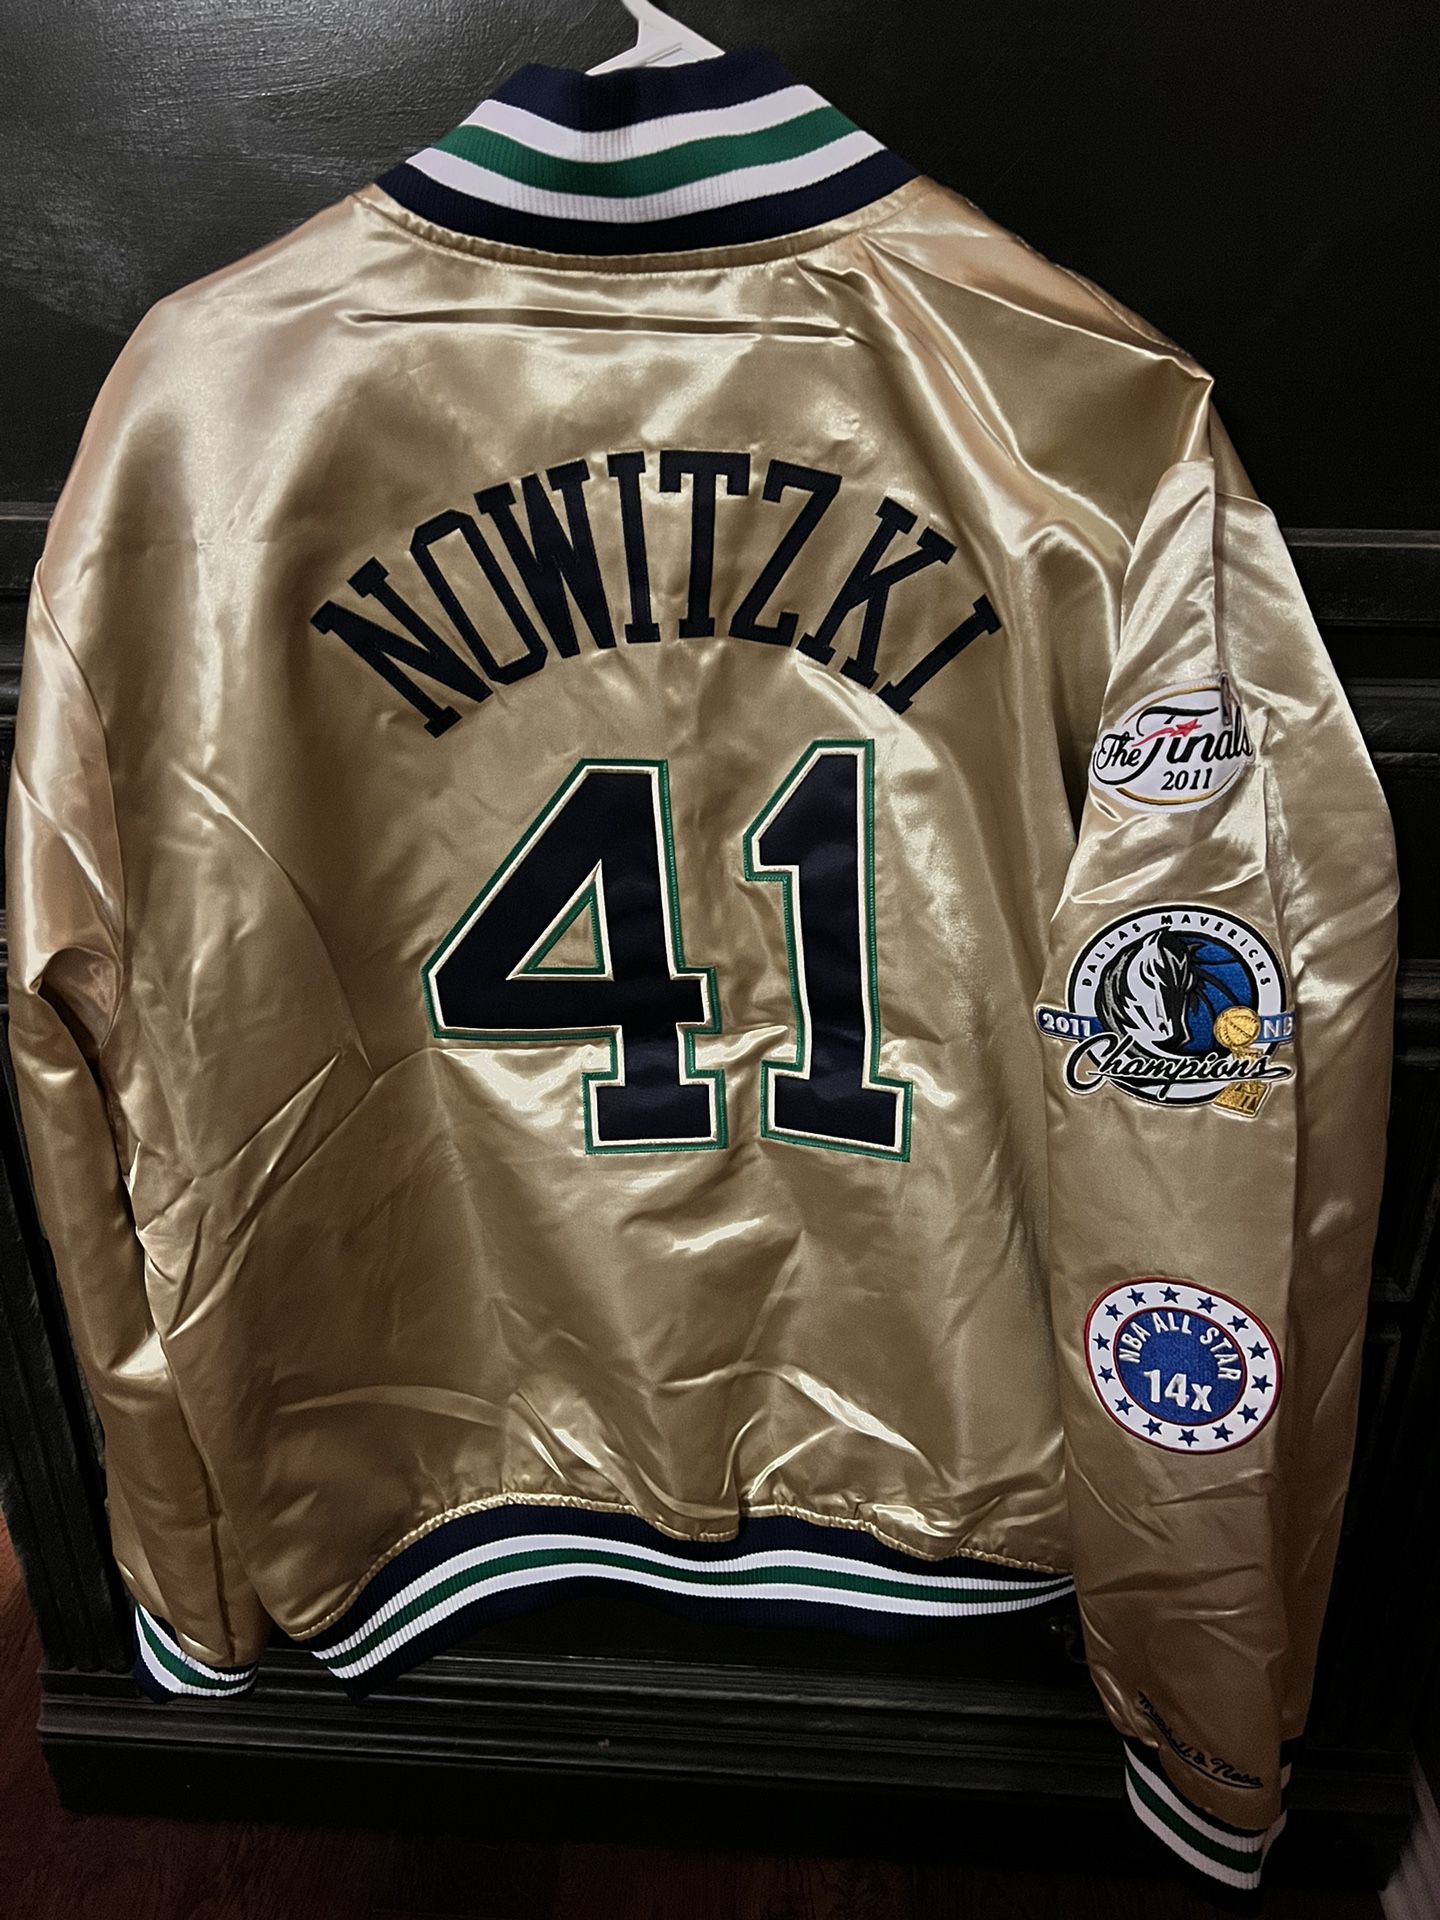 Dirk Nowitzki signed jersey for Sale in Dallas, TX - OfferUp